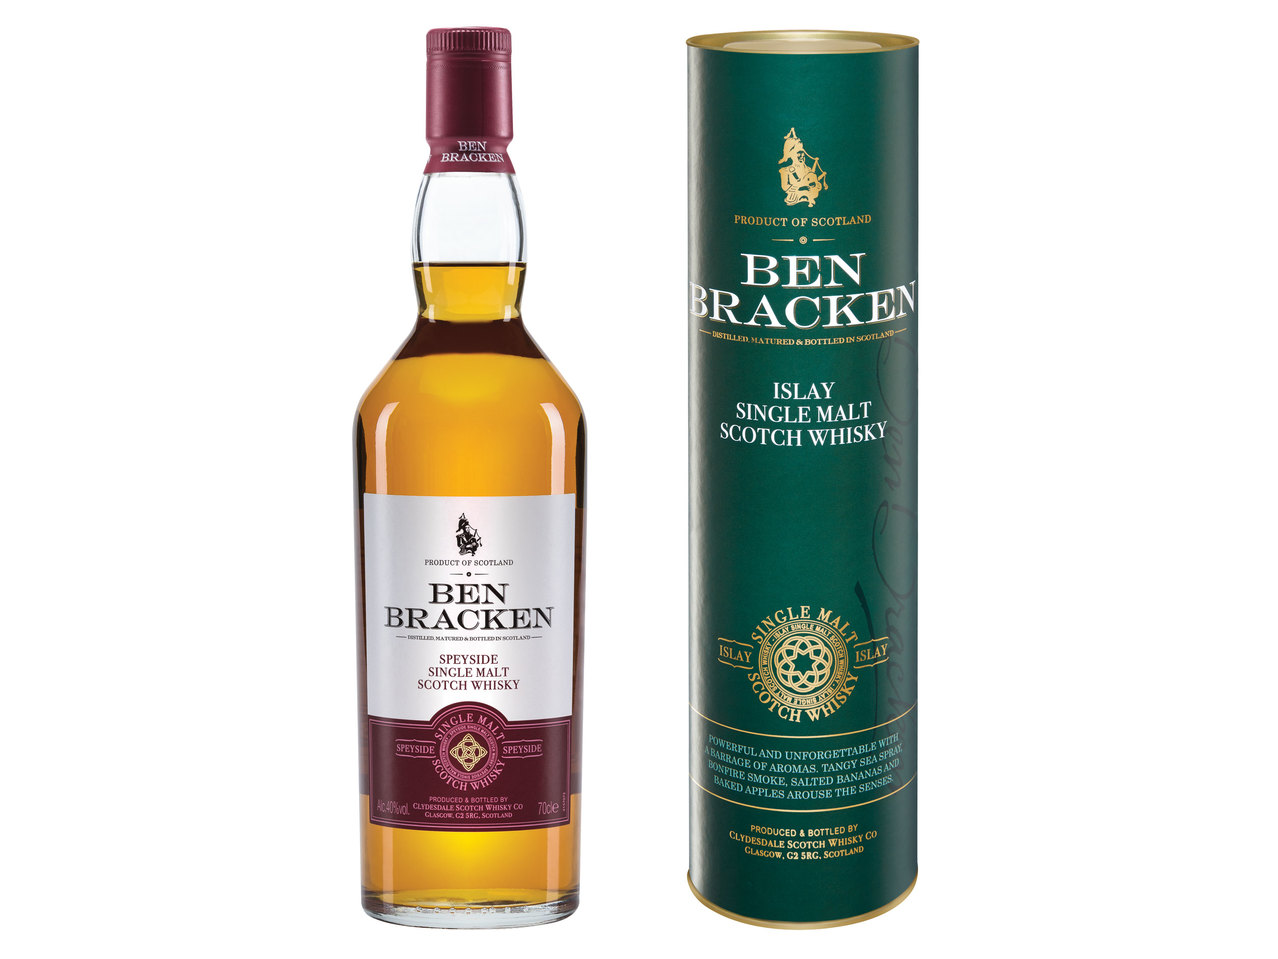 BEN BRACKEN Speyside Single/Islay Single Malt Scotch Whisky1